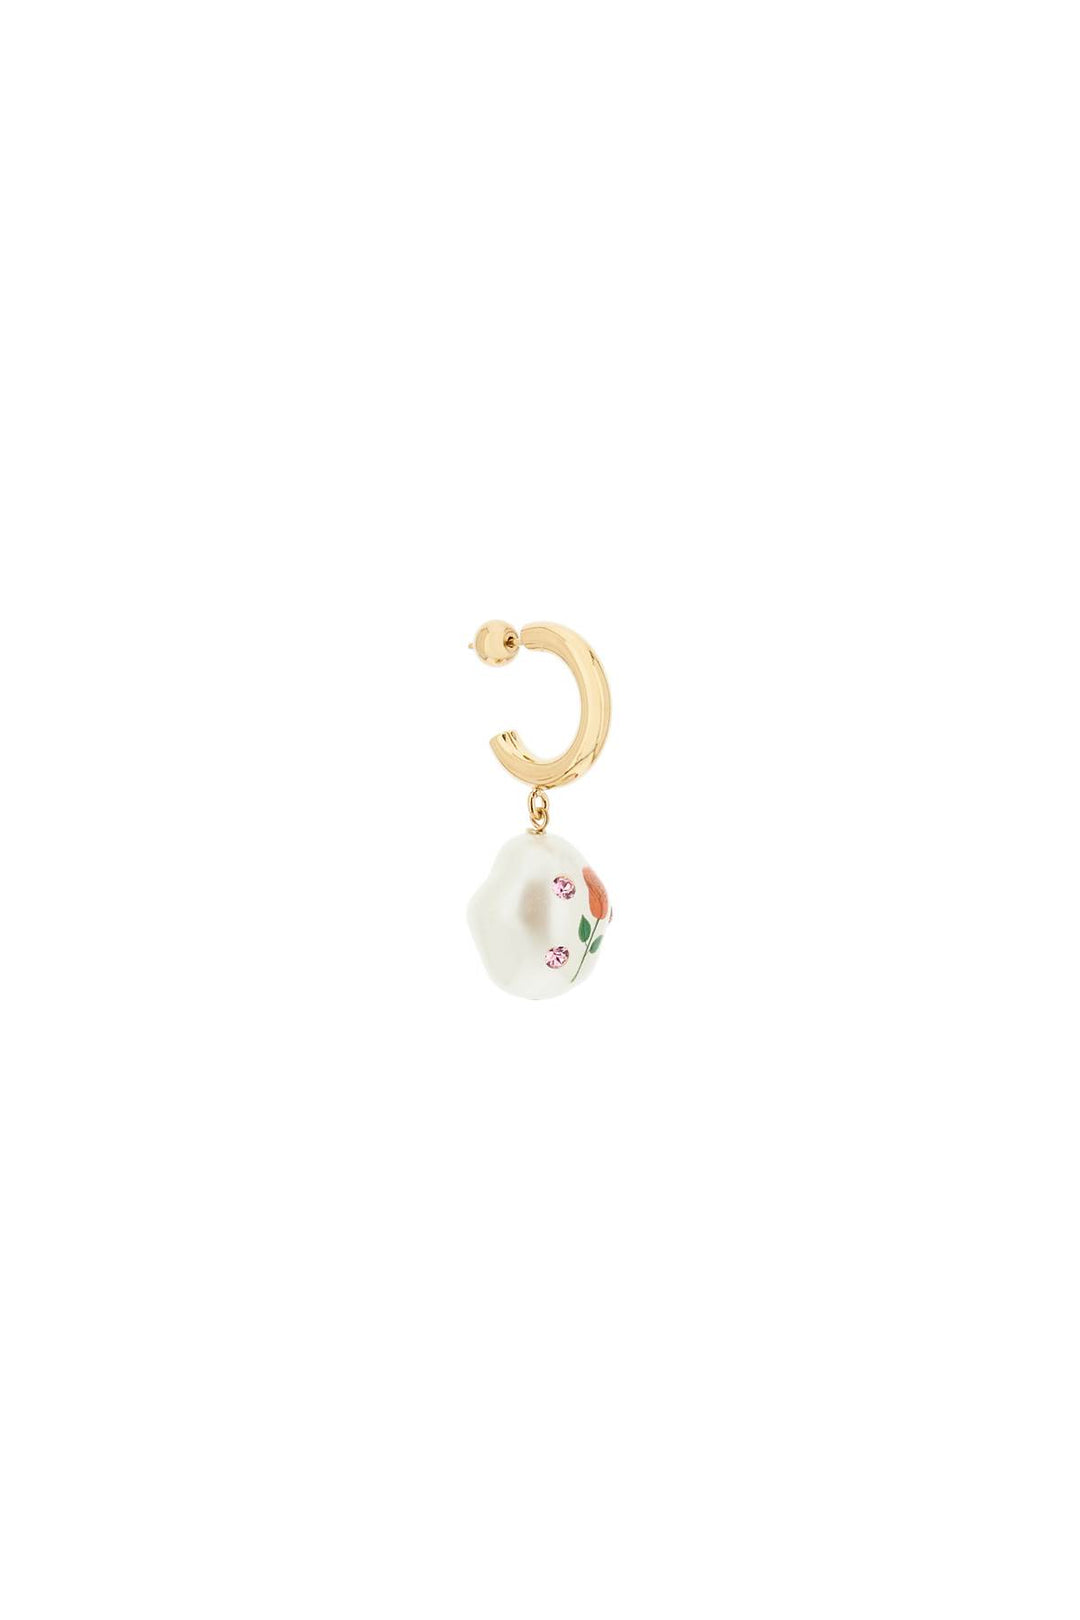 Saf Safu 'Jelly Cotton Candy' Single Earring   Oro